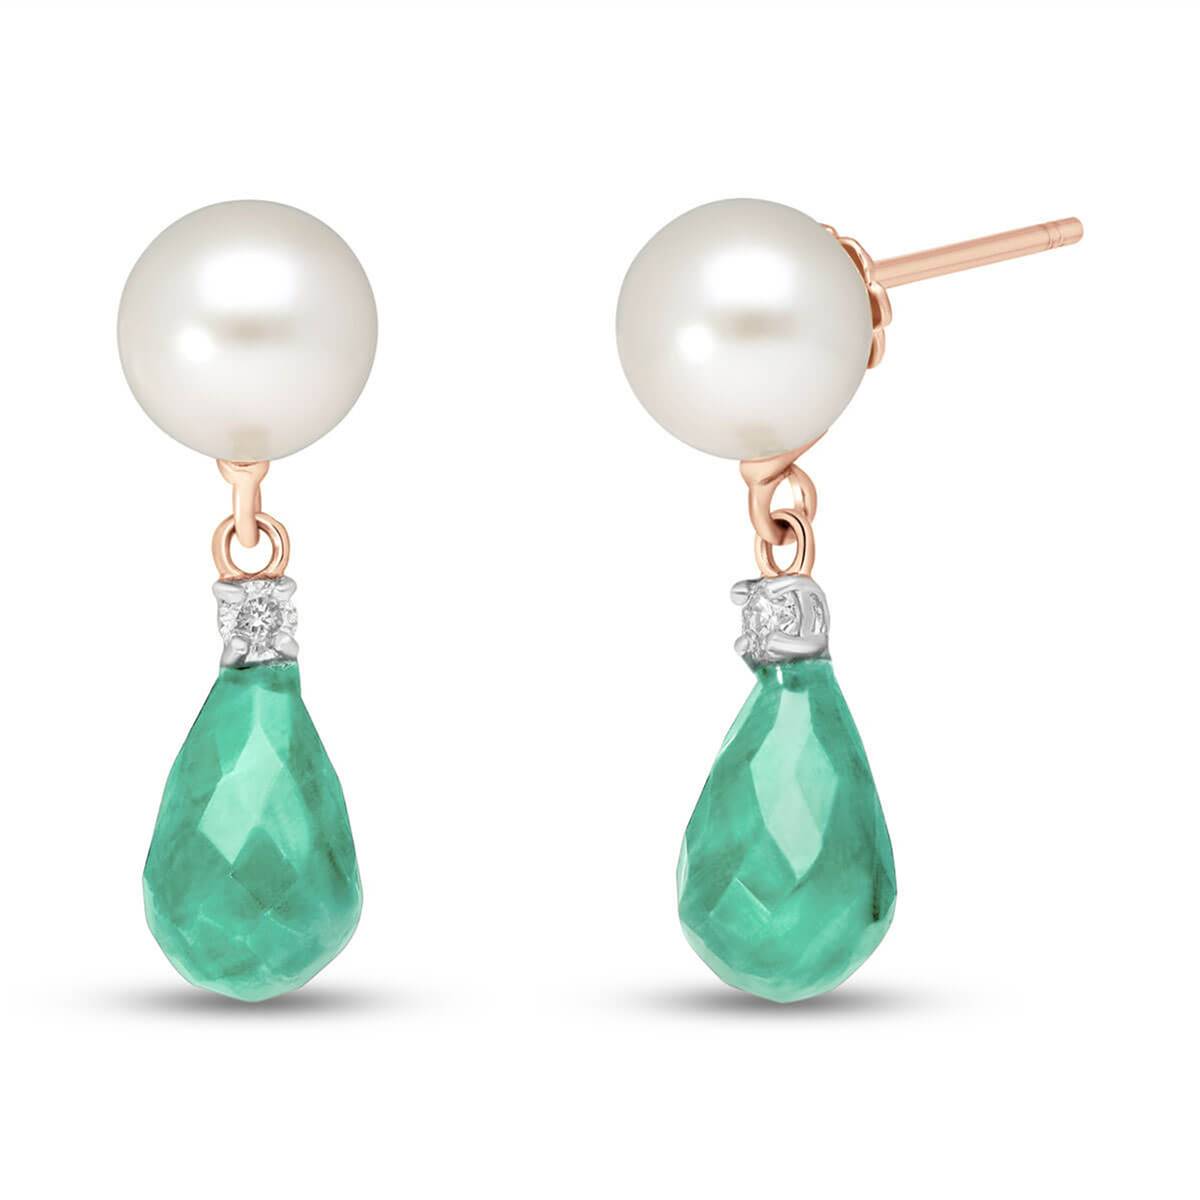 14K Solid Rose Gold Stud Earrings w/ Diamonds, Emerald & Pearls